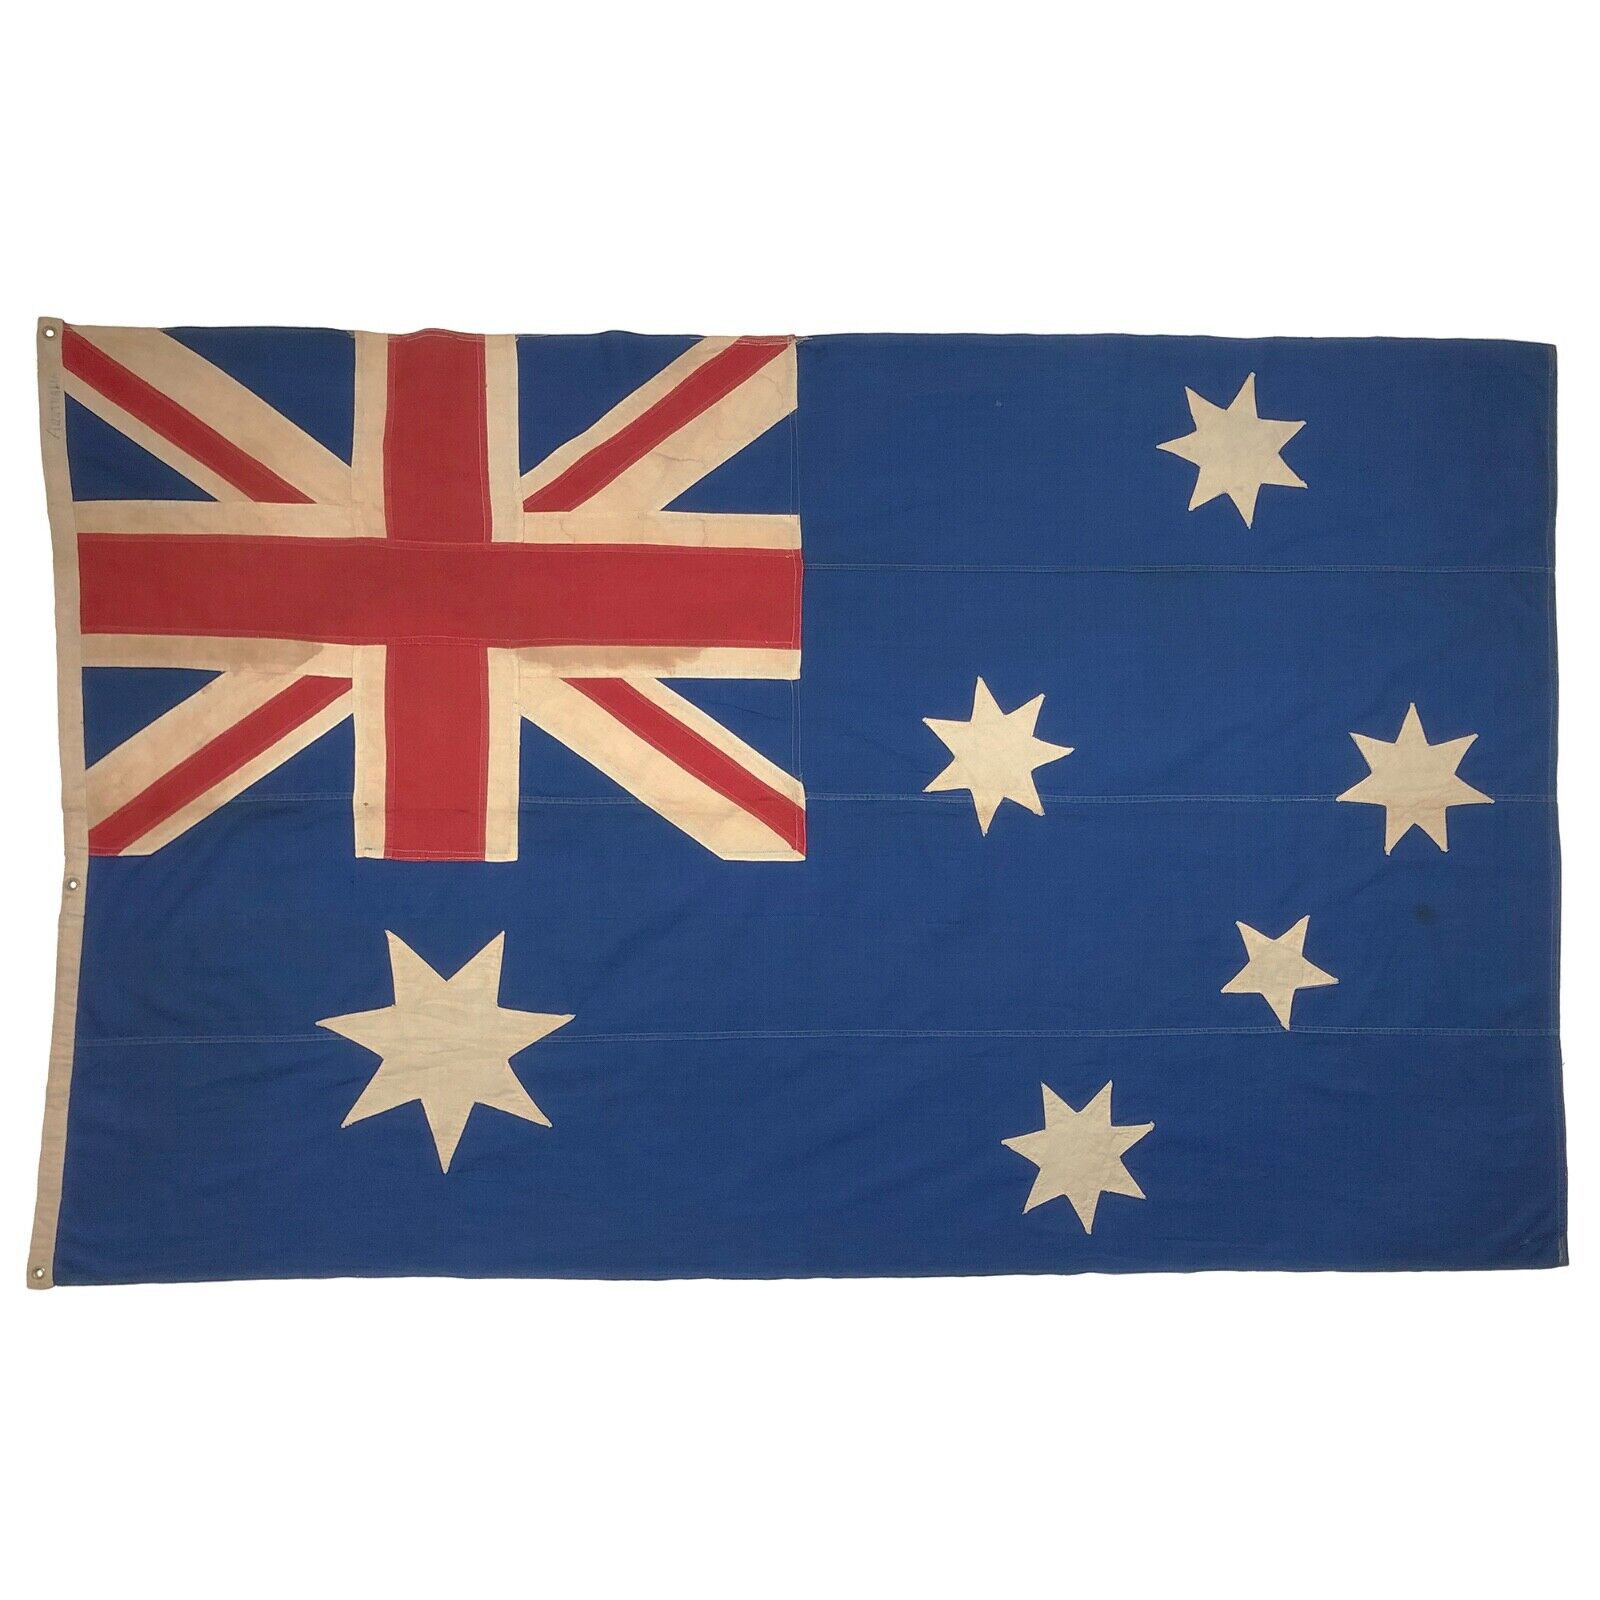 Vintage Wool Hand-Painted Flag Australia Banner Distressed Old Cloth Union Jack